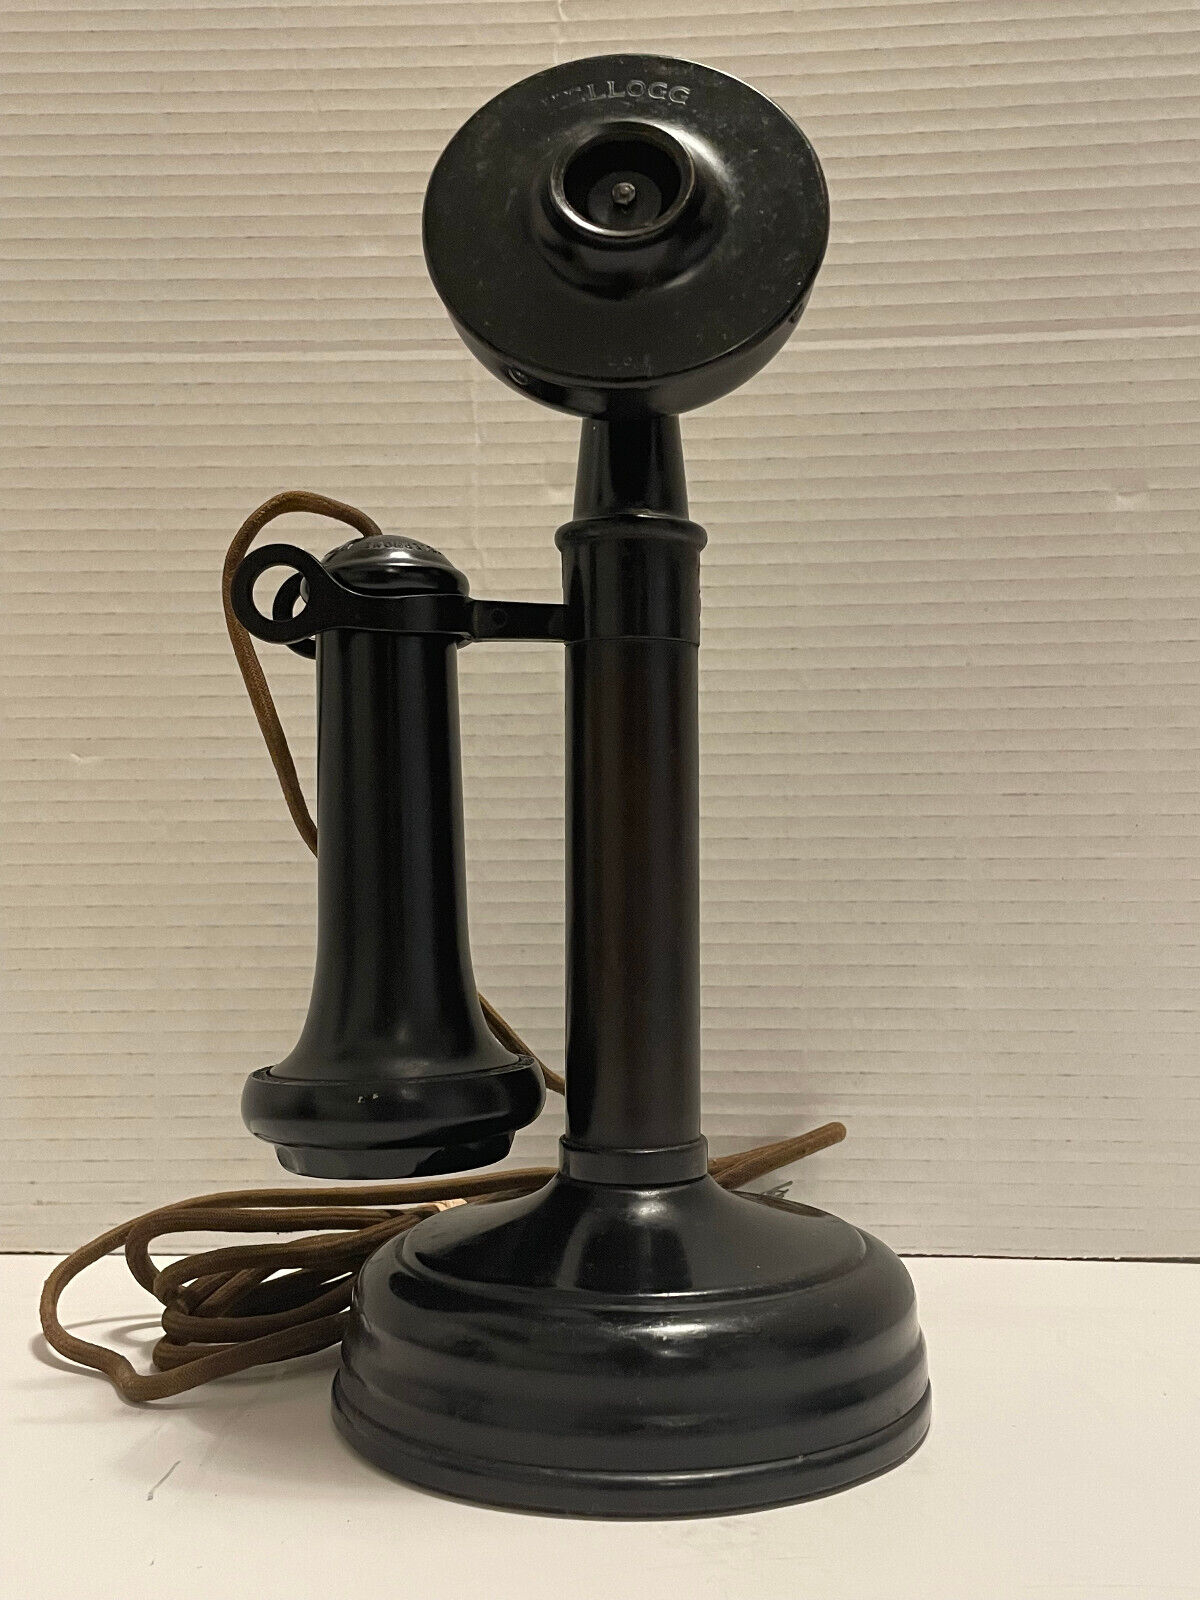 Vintage old 1908 Kellogg candlestick telephone phone Stromberg Carlson receiver